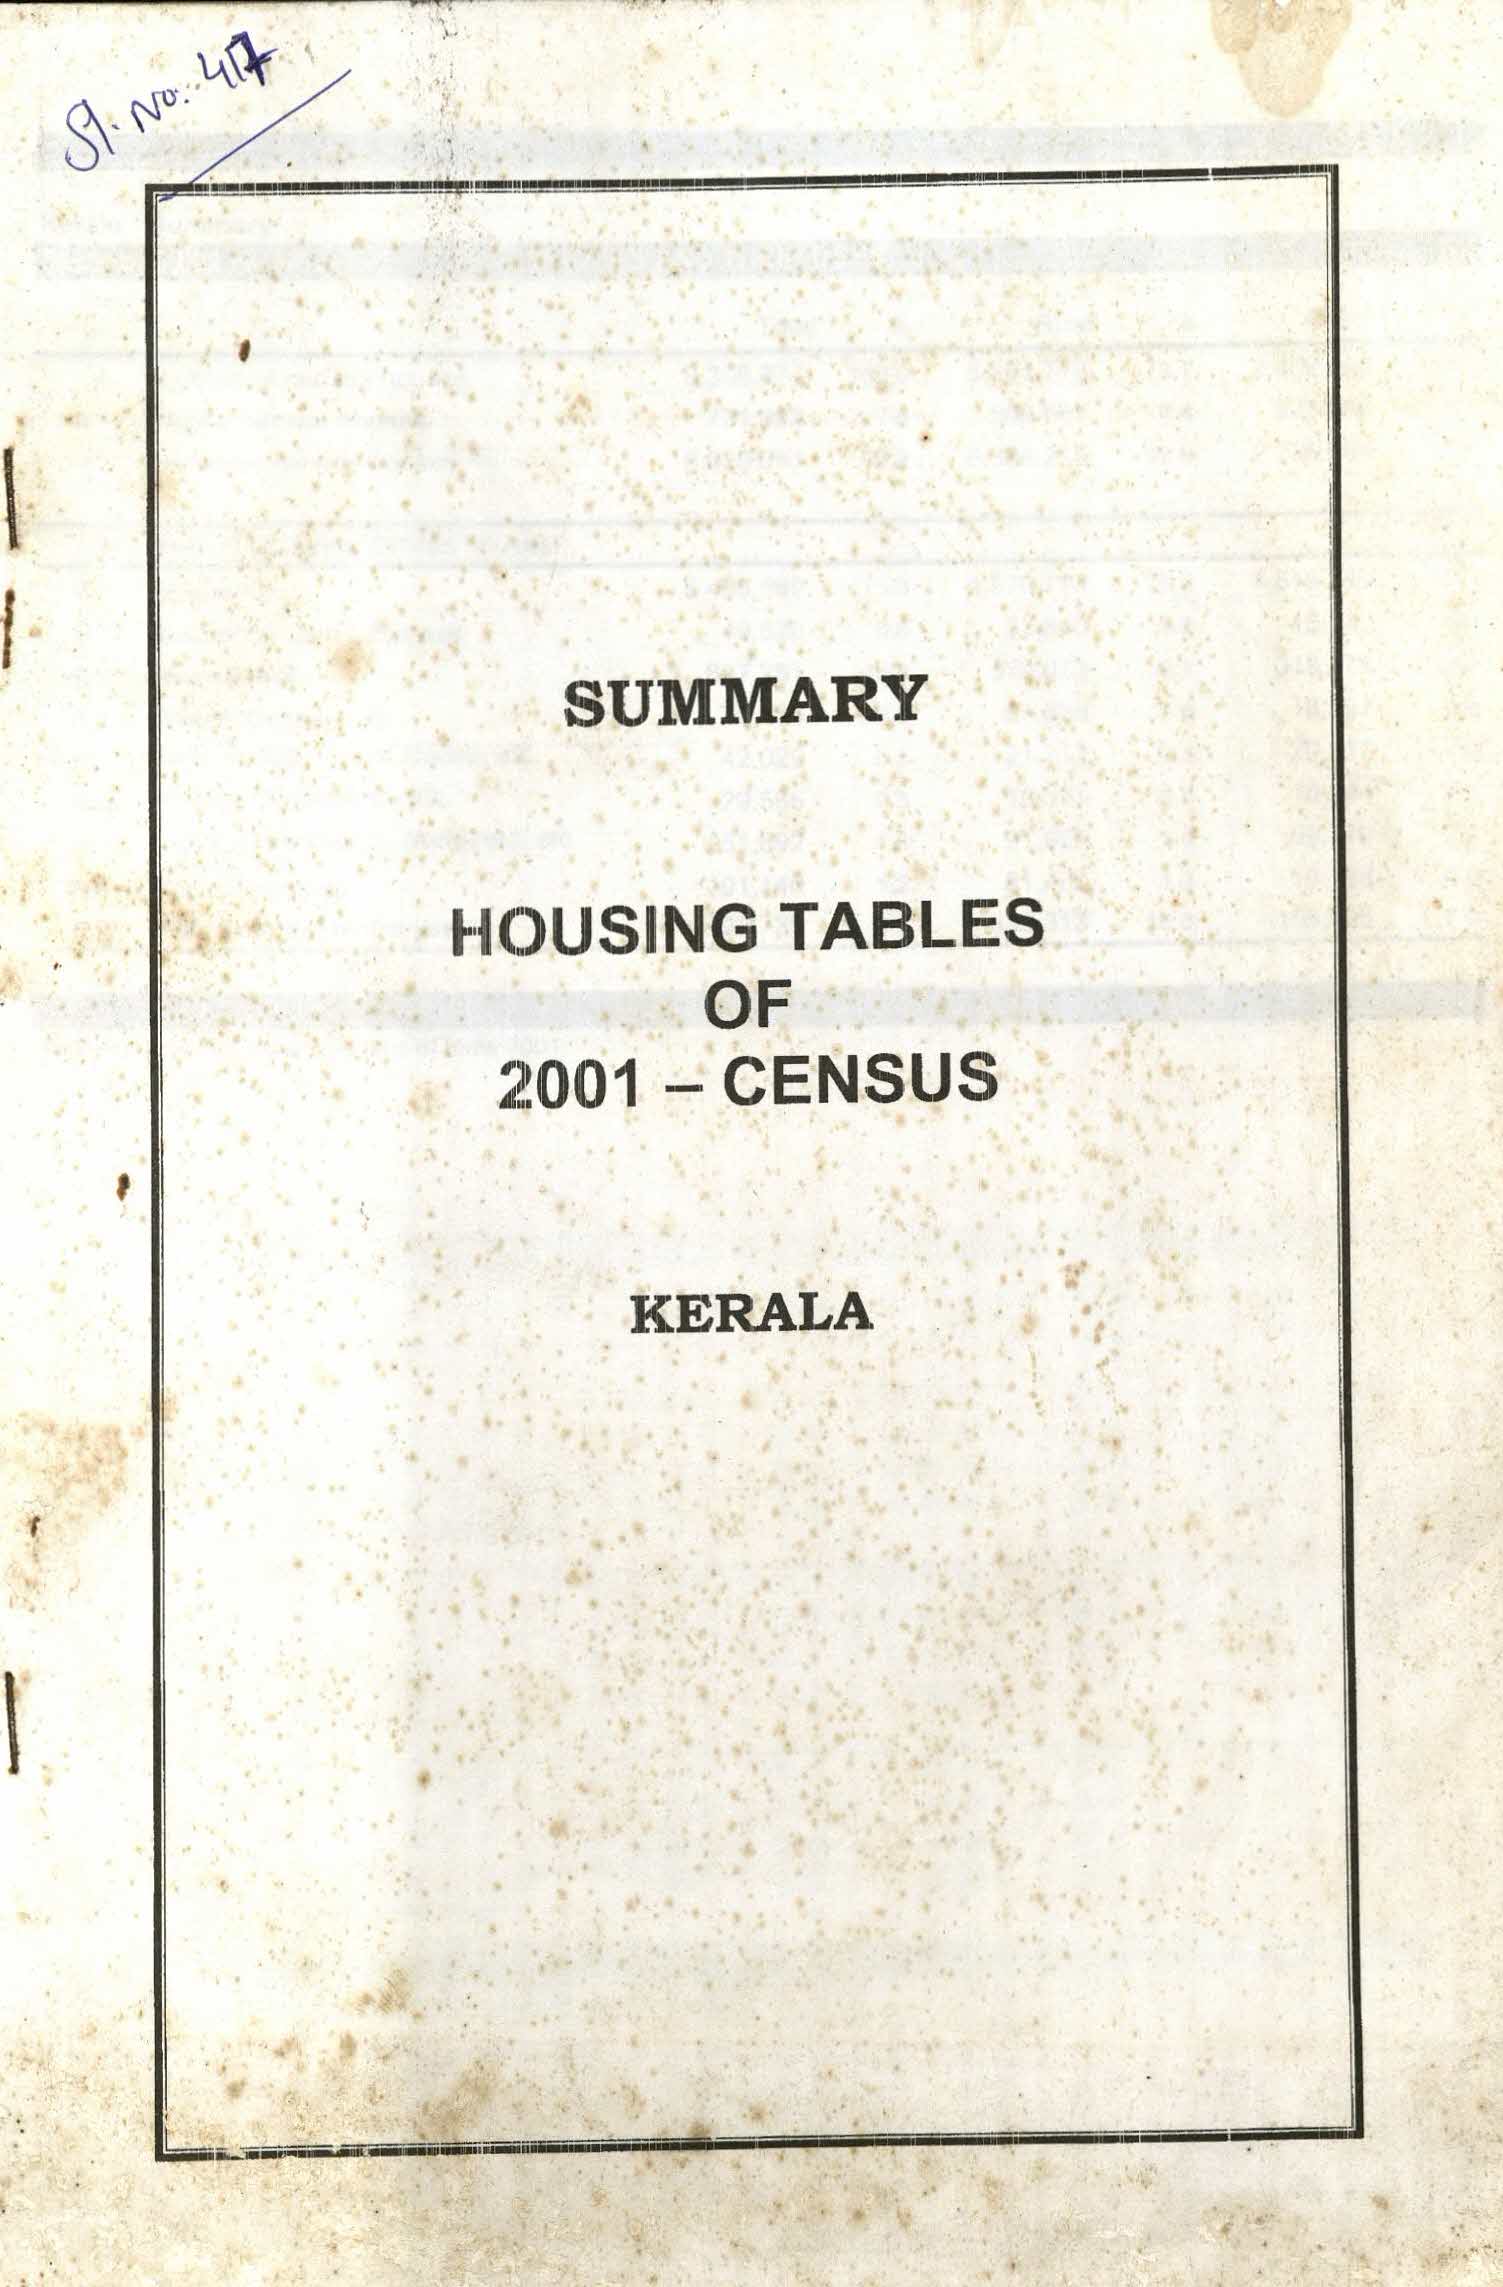 SUMMARY HOUSING TABLES OF 2001 CENSUS - KERALA